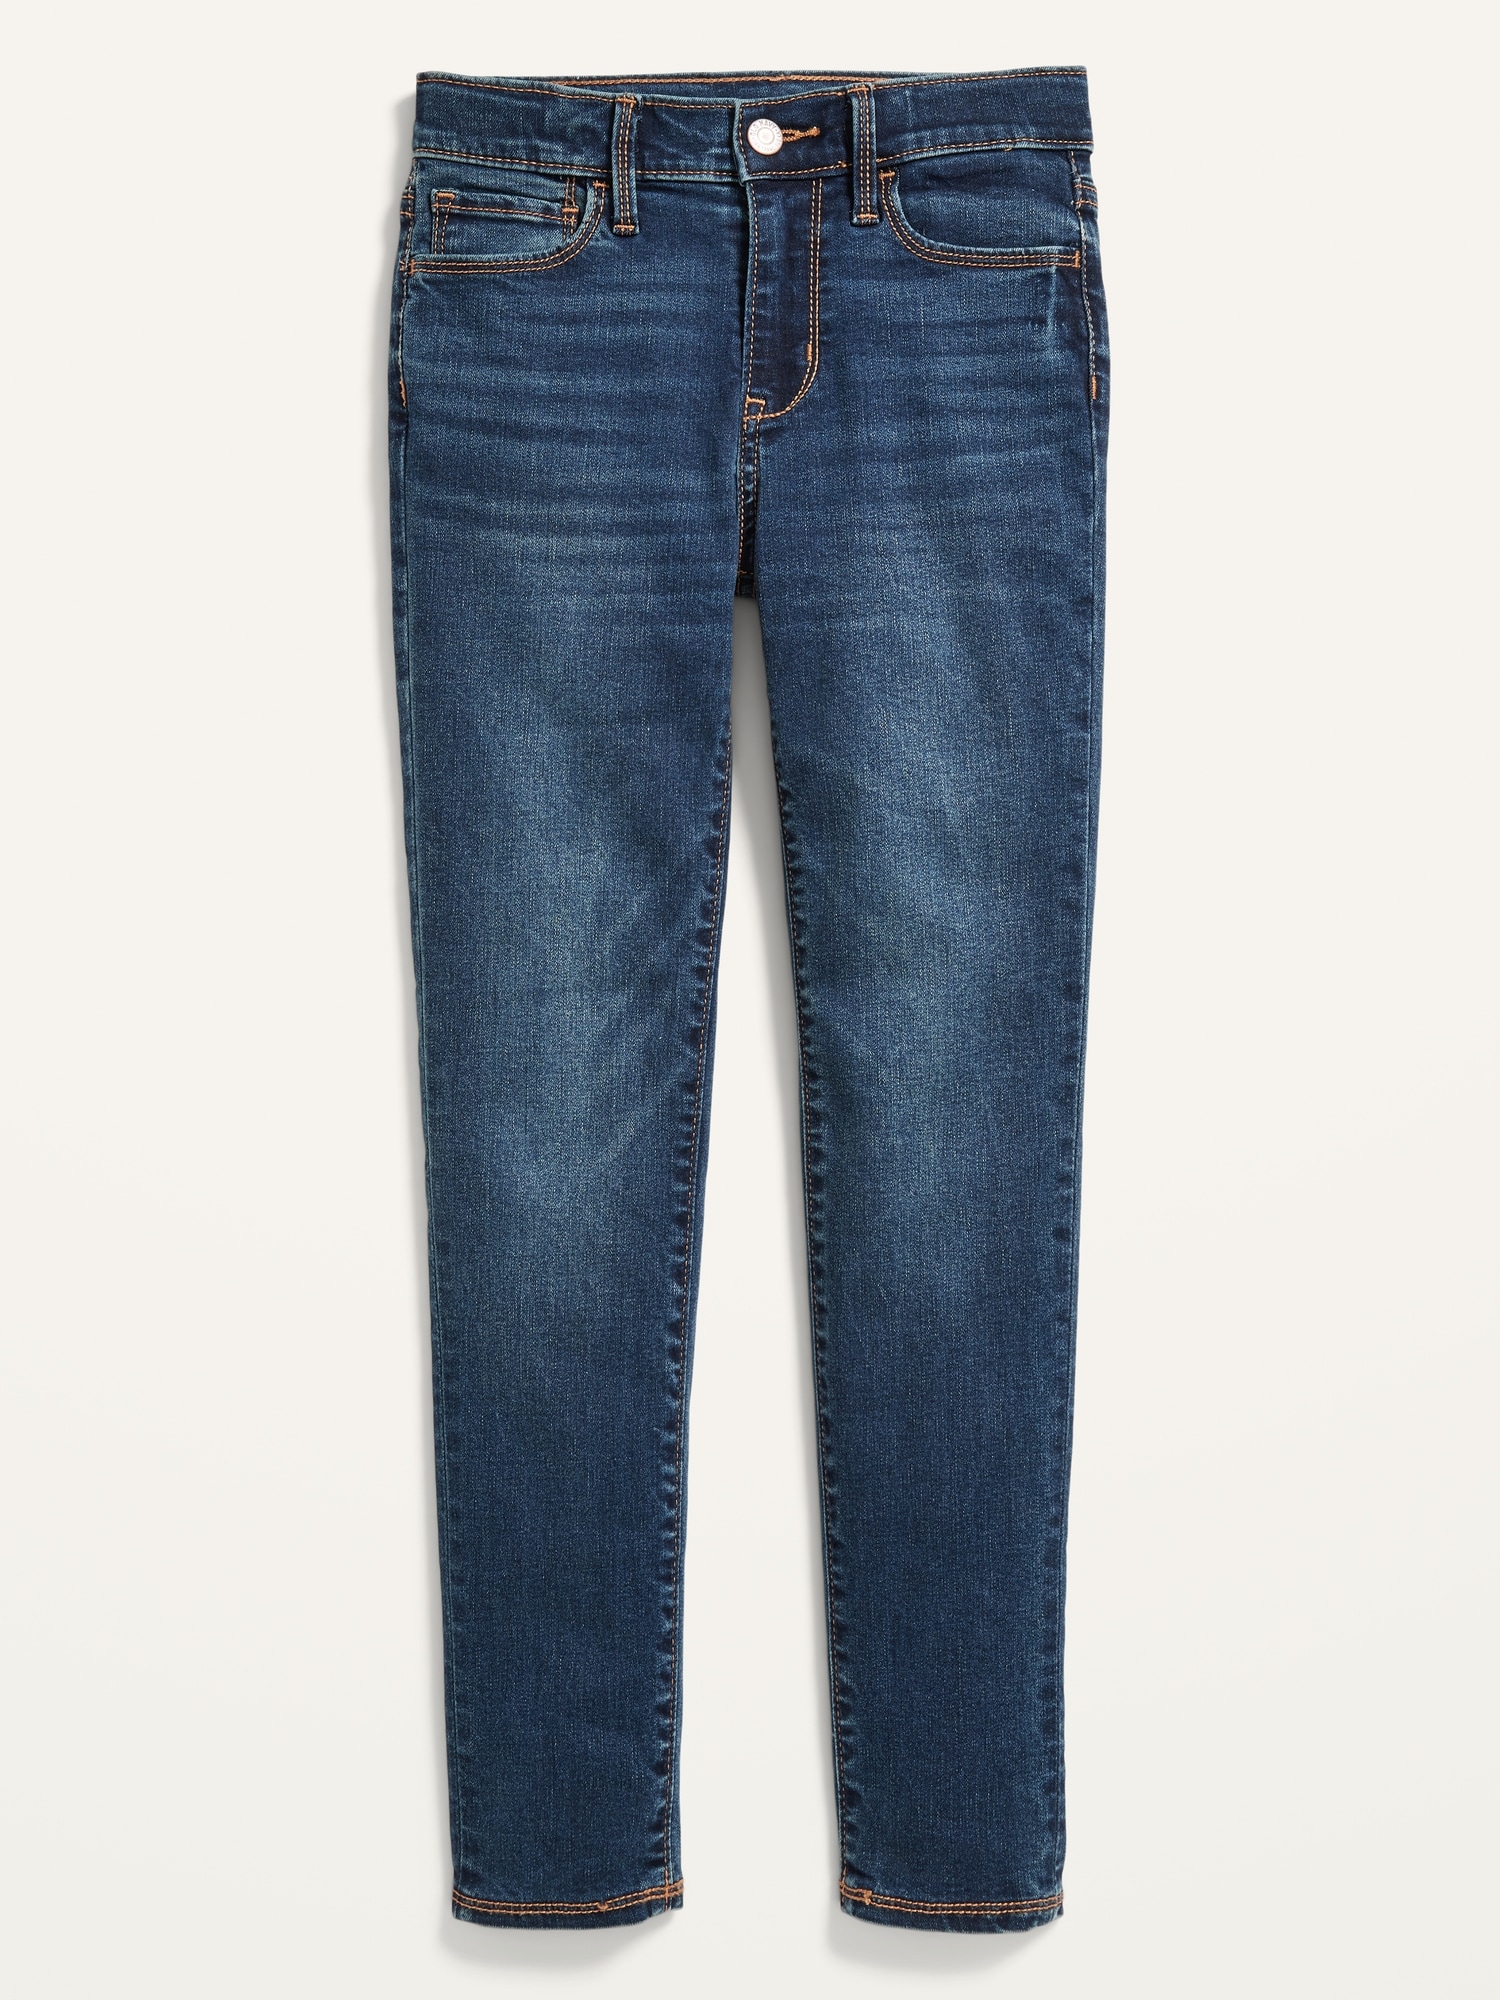 Denim By H&M Super Skinny High Waist Jeggings Jeans Women's Size